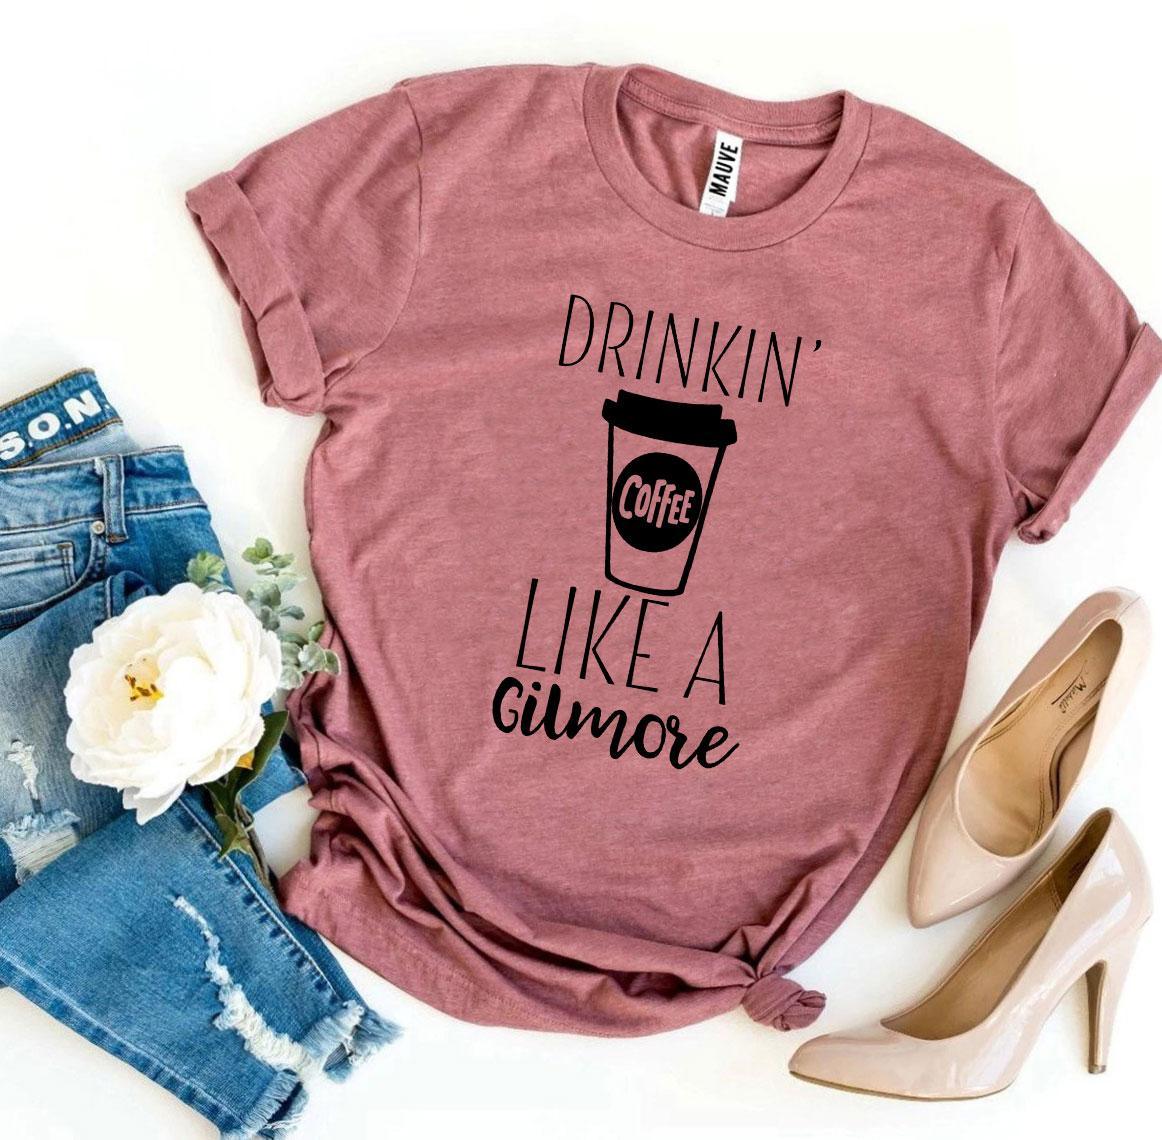 Drinkin’ Coffee Like a Gilmore T-shirt - Hollywood Box